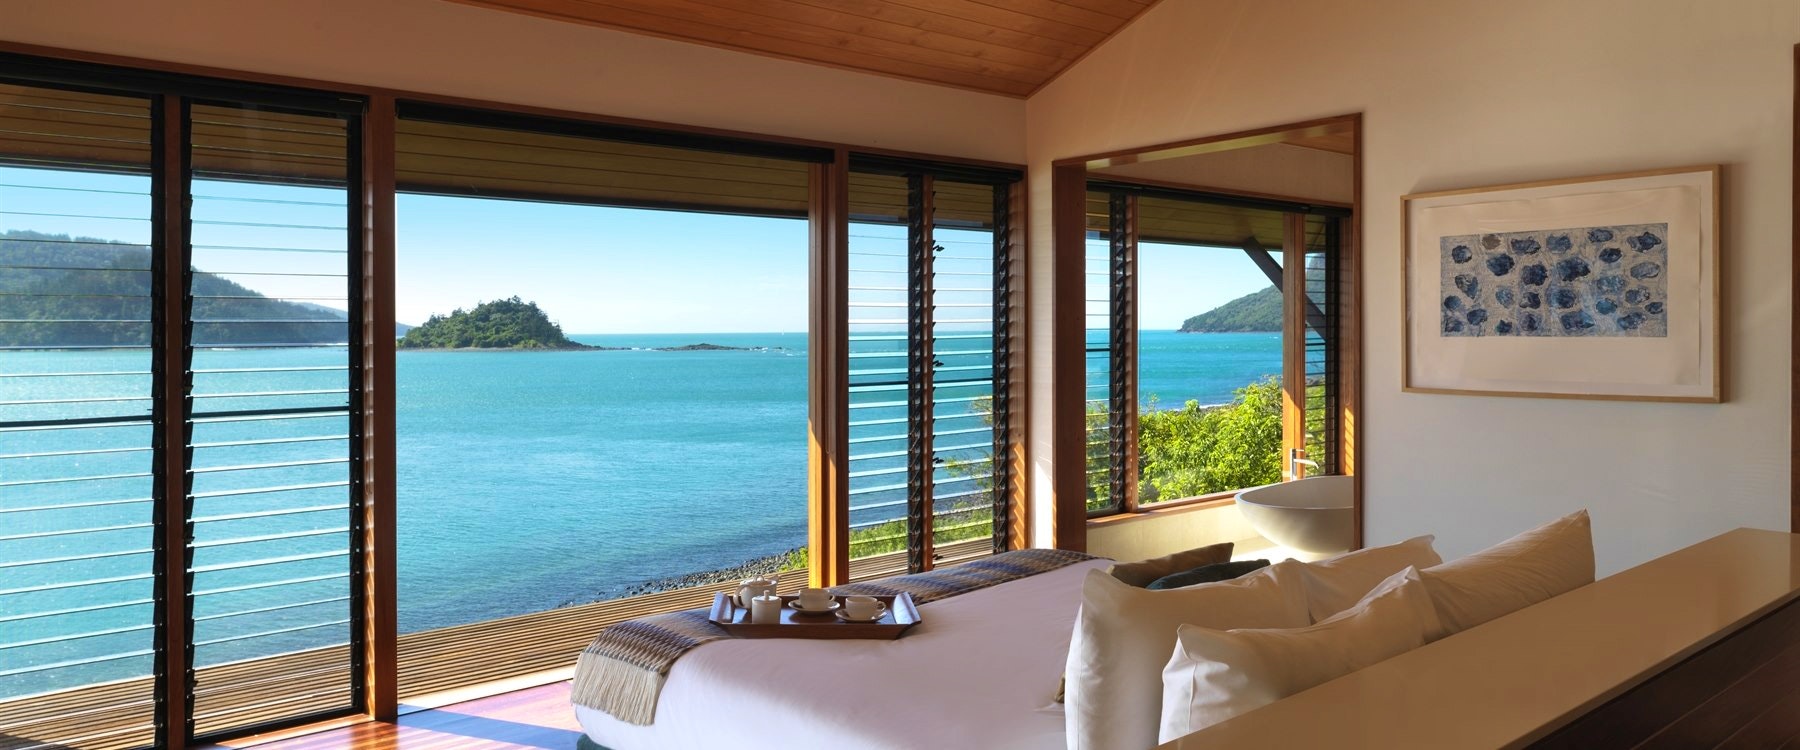 Beautiful bedroom view, qualia, hamilton island